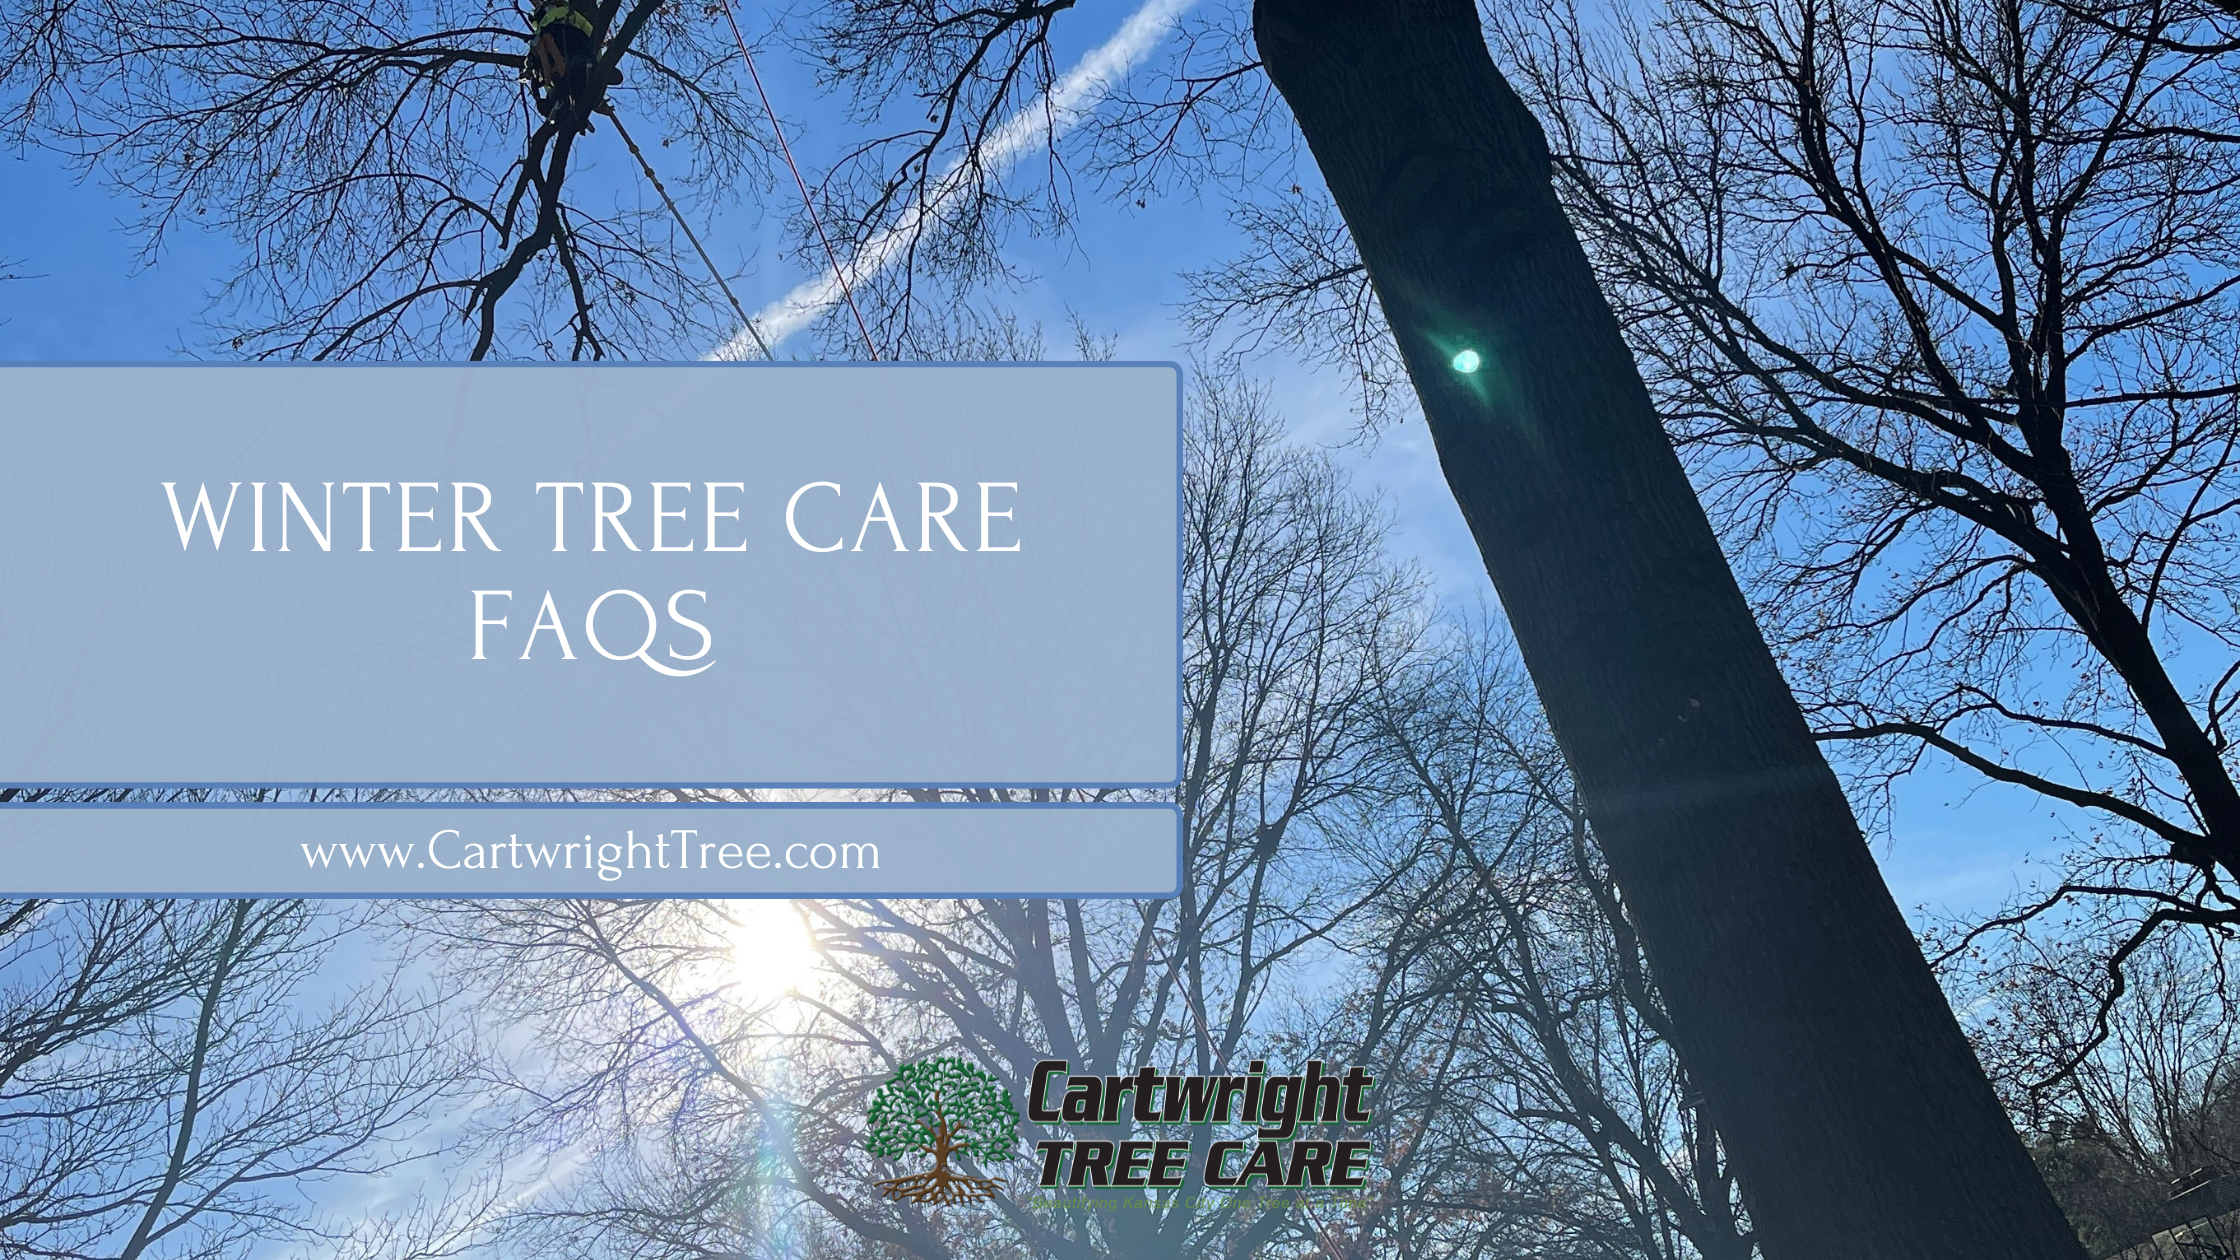 Winter Tree Care FAQs From Cartwright Tree Care in Kansas City Missouri